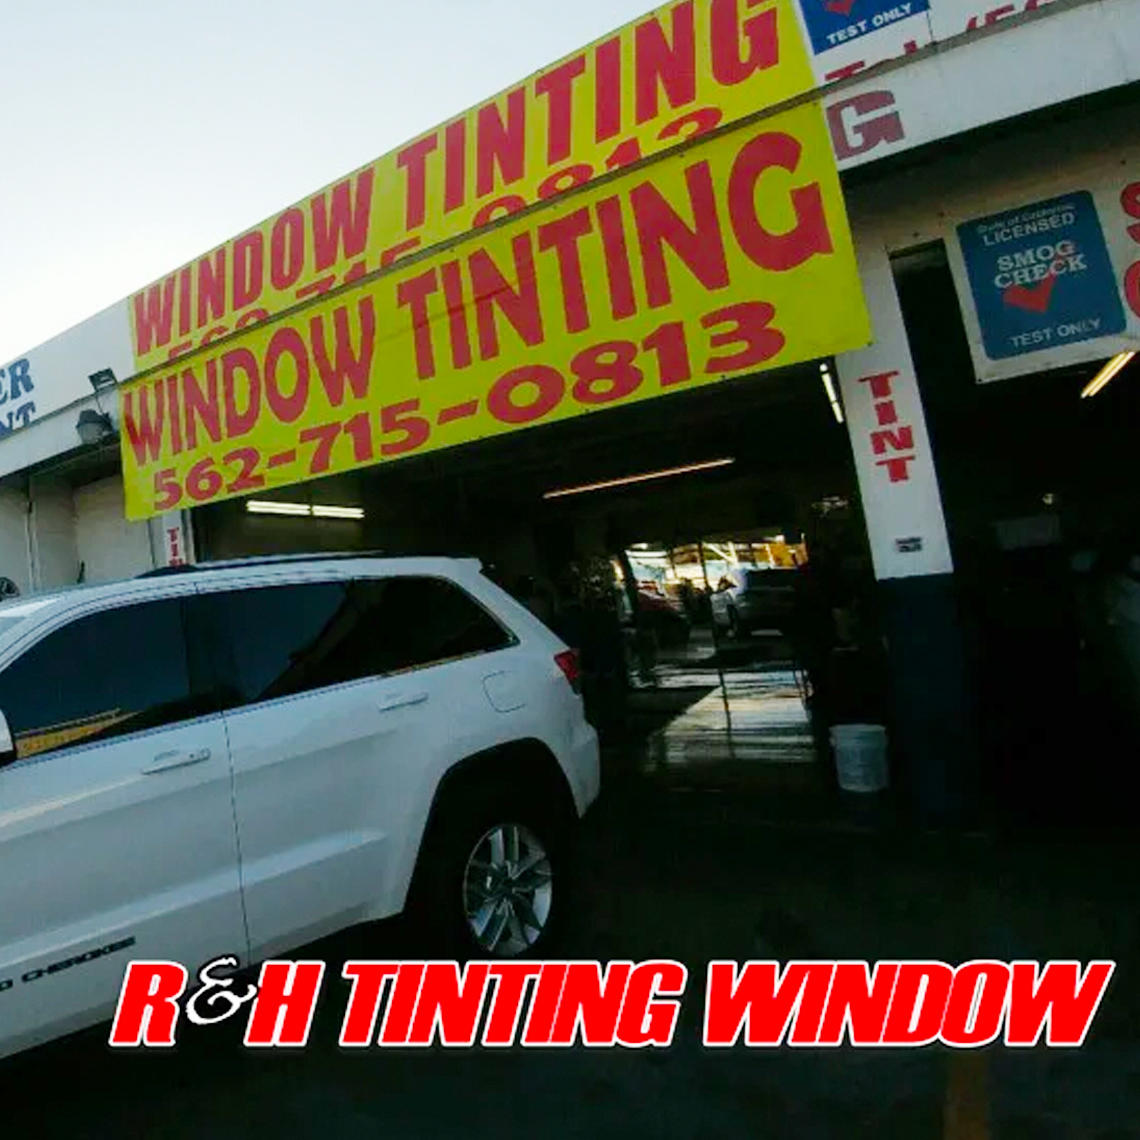 R & H Tinting Window - Window Tinting Sevices